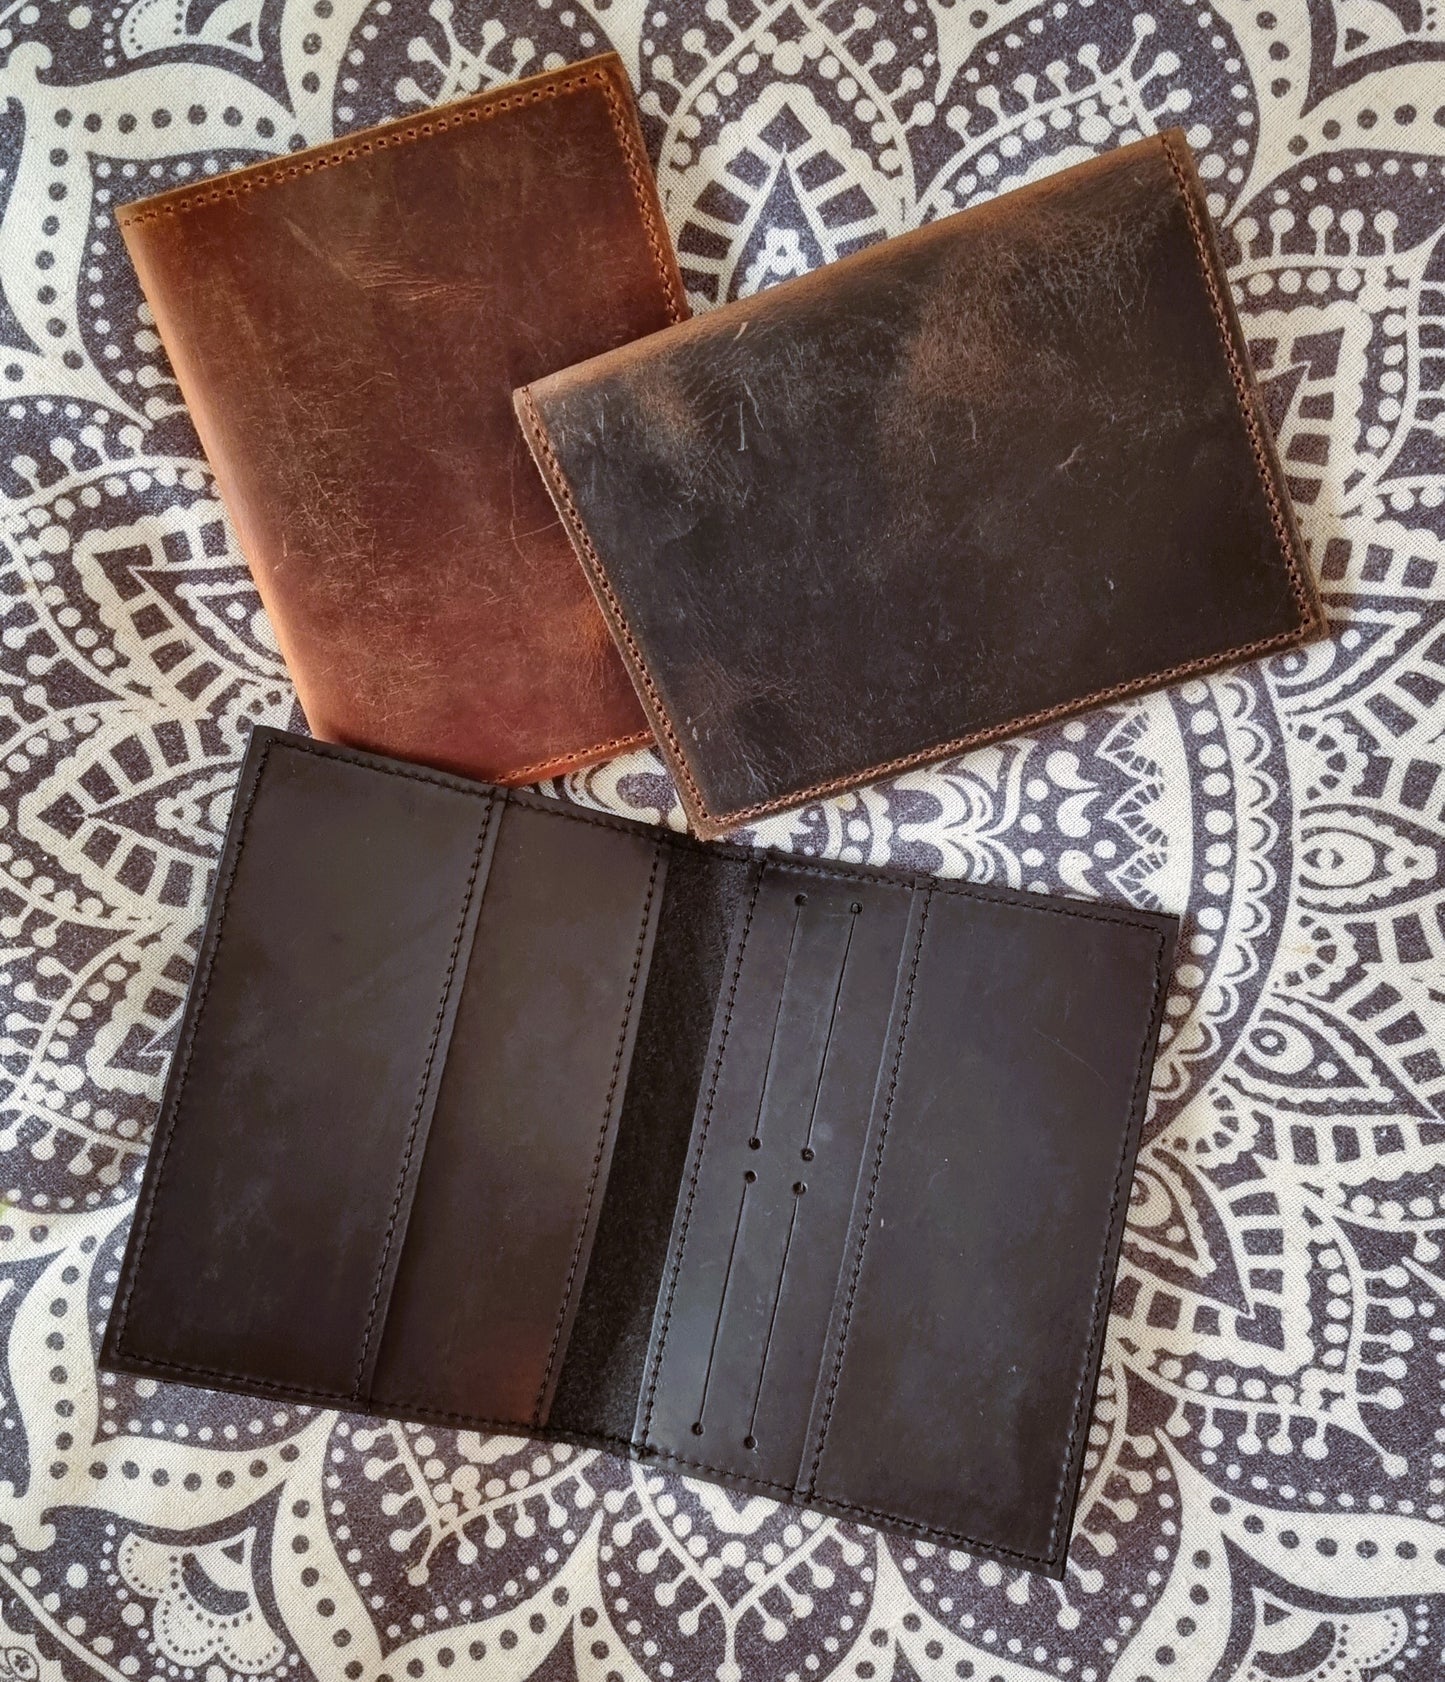 Medium size wallet